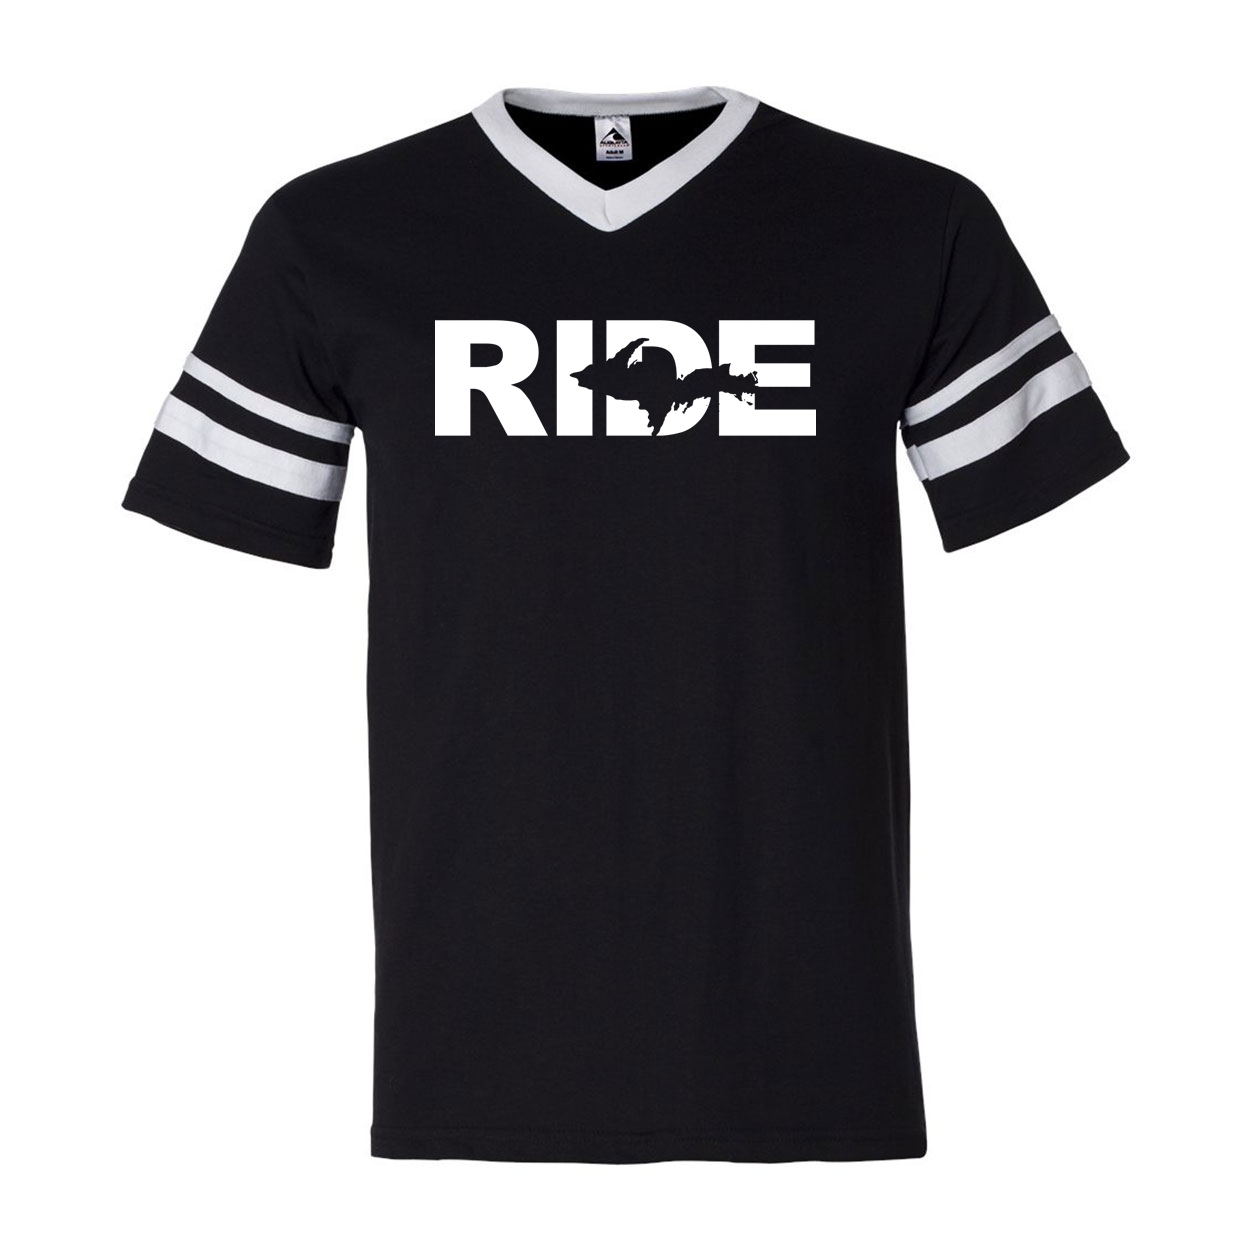 Ride Michigan UP Classic Premium Striped Jersey T-Shirt Black/White (White Logo)